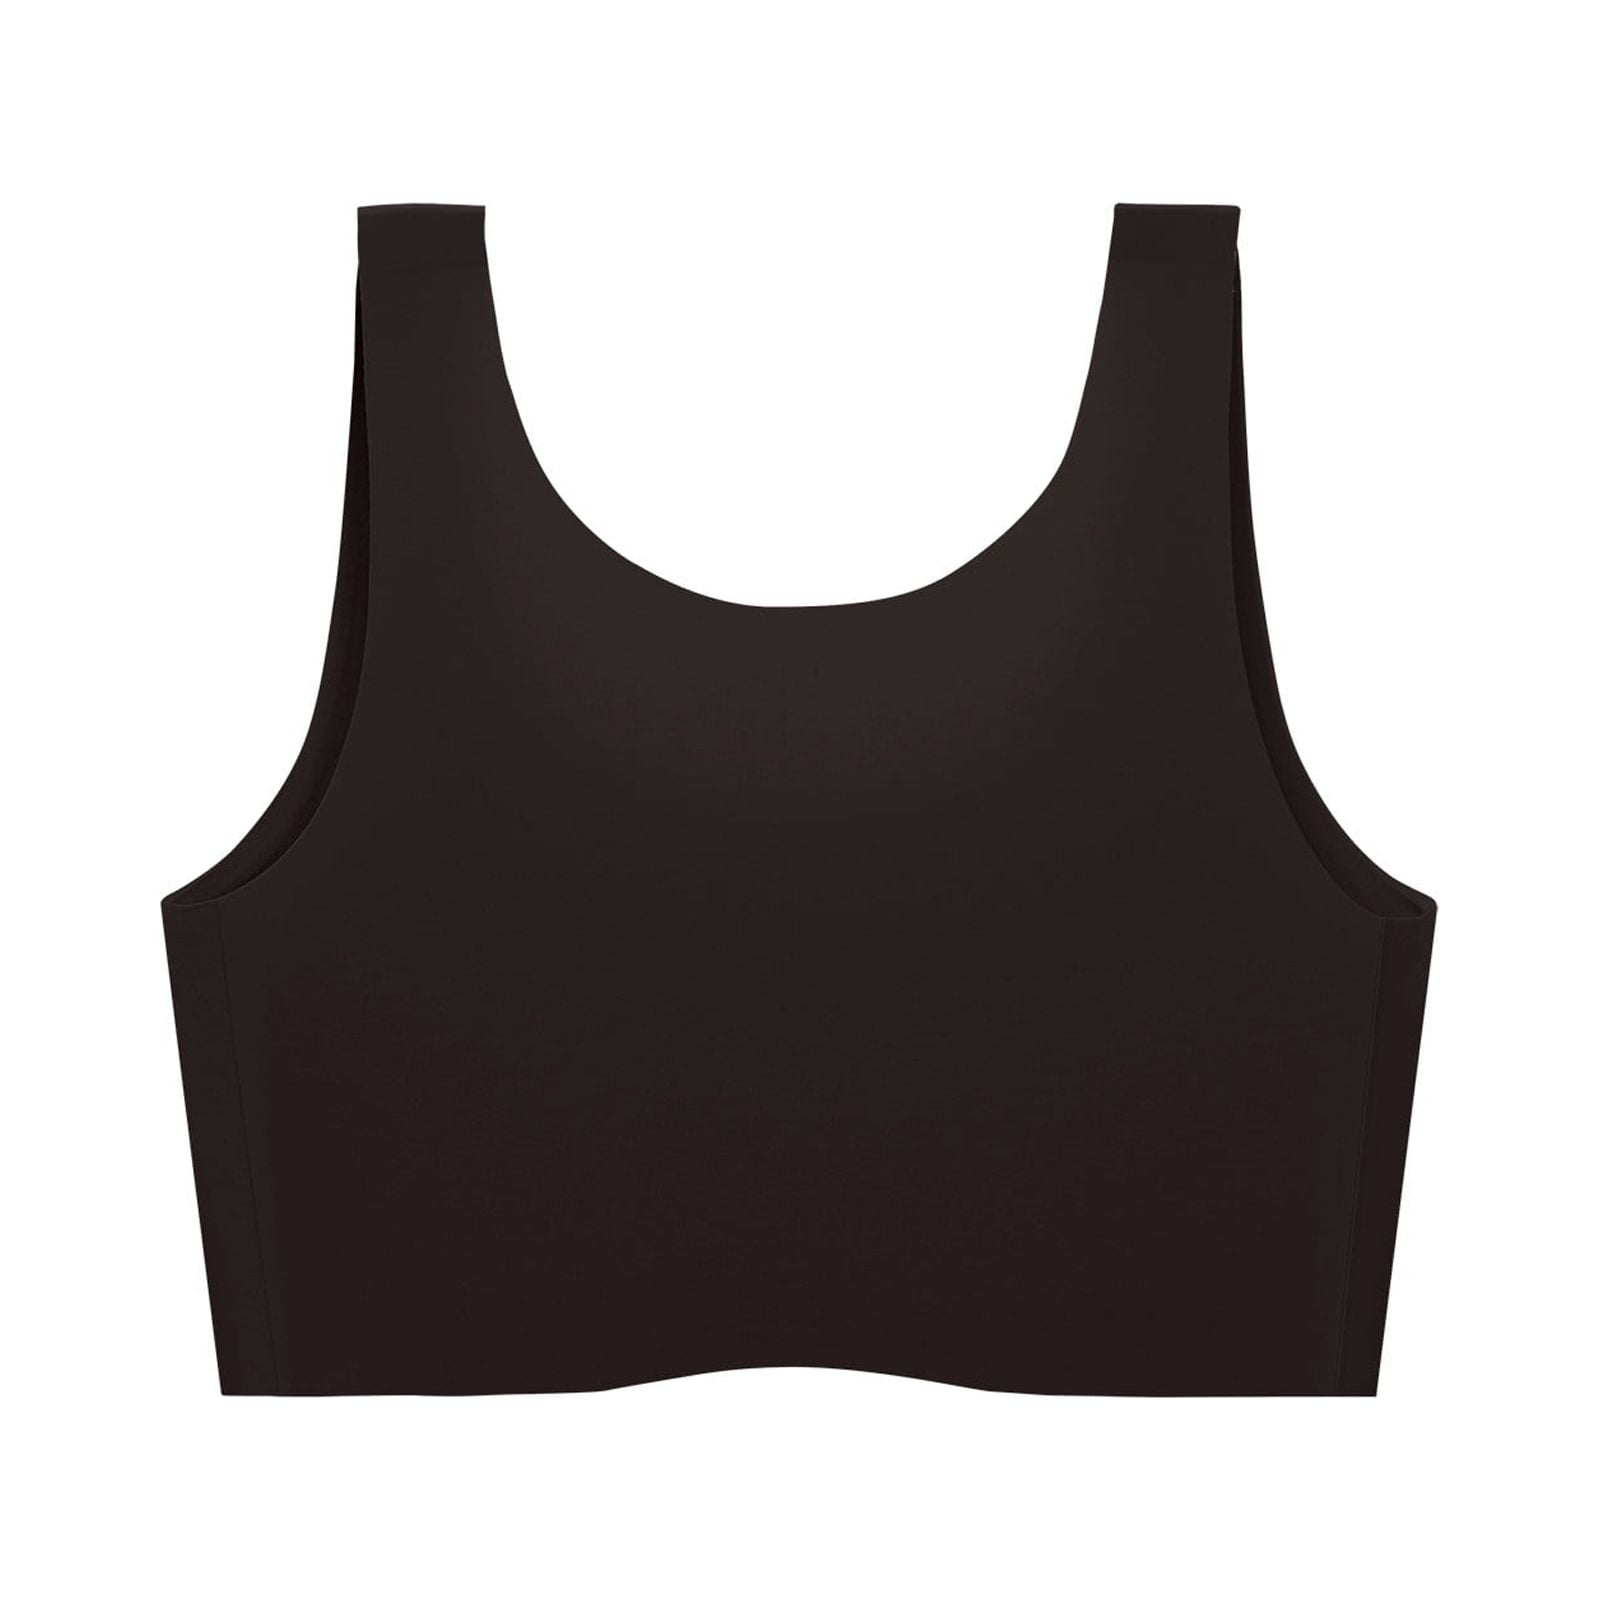  CRZ YOGA Butterluxe Racerback High Neck Longline Sports Bras  For Women - Padded Workout Crop Tank Tops